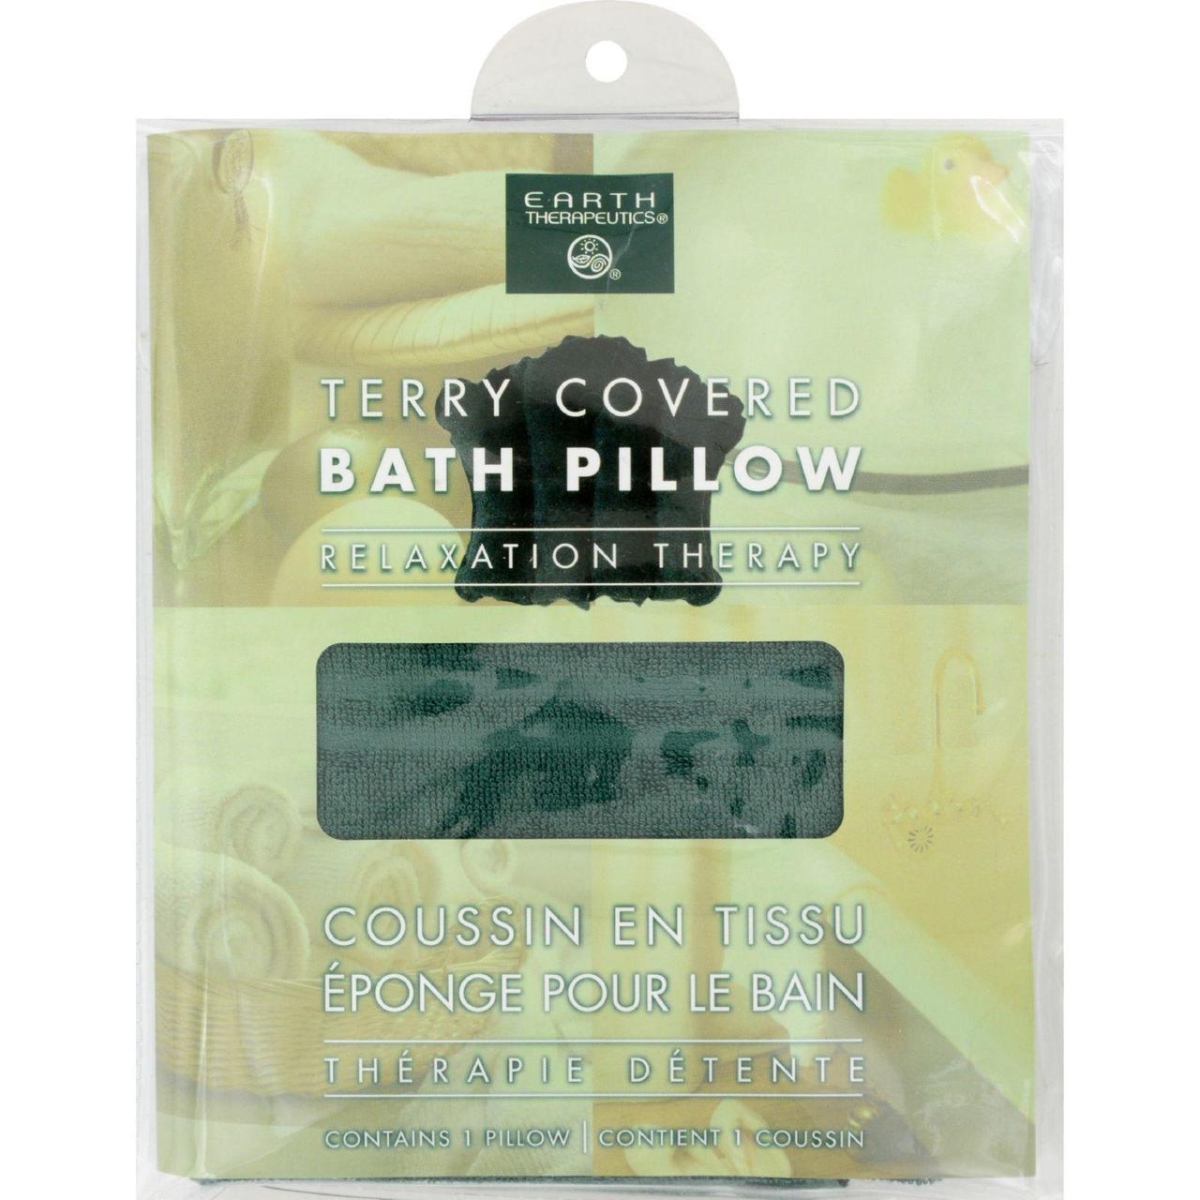 Hg0755660 Terry Covered Bath Pillow, Dark Green